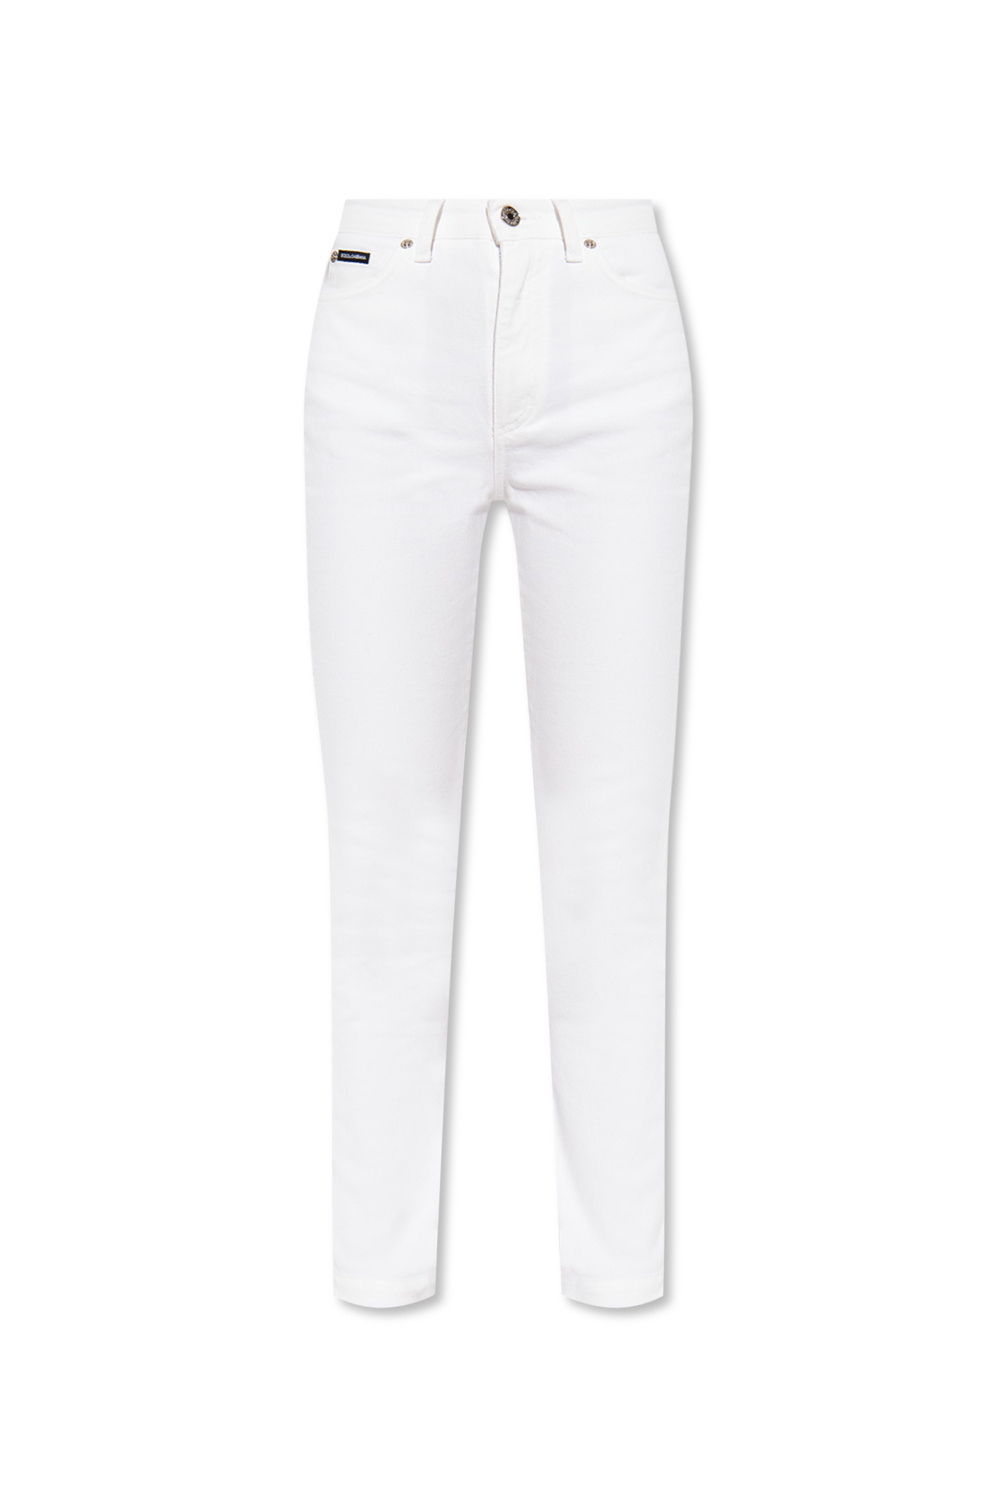 Dolce & Gabbana 'Audrey' jeans | Women's Clothing | Vitkac